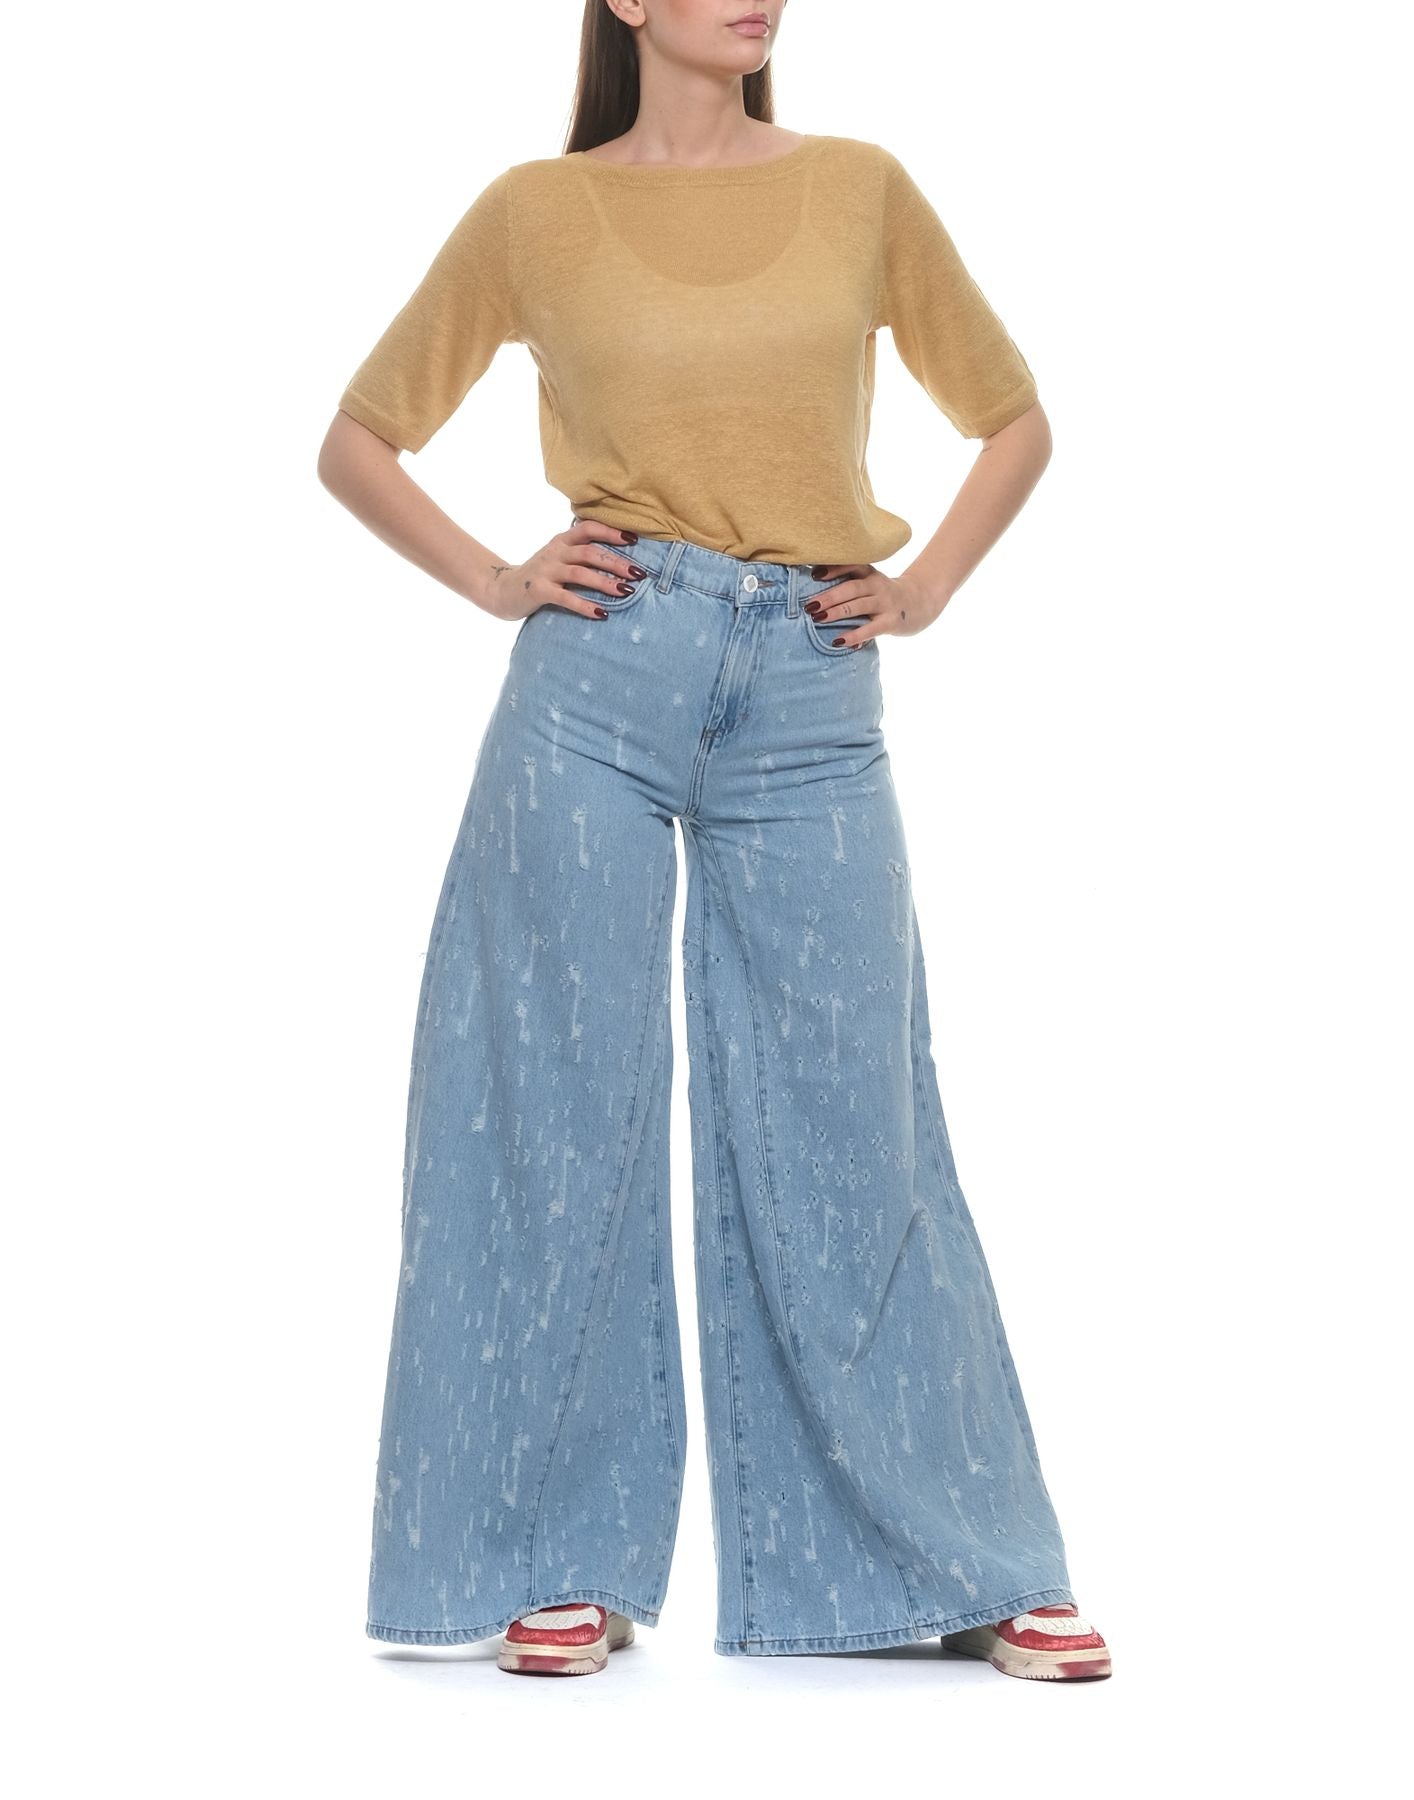 Jeans woman AMD002D3802021 TURN APART Amish